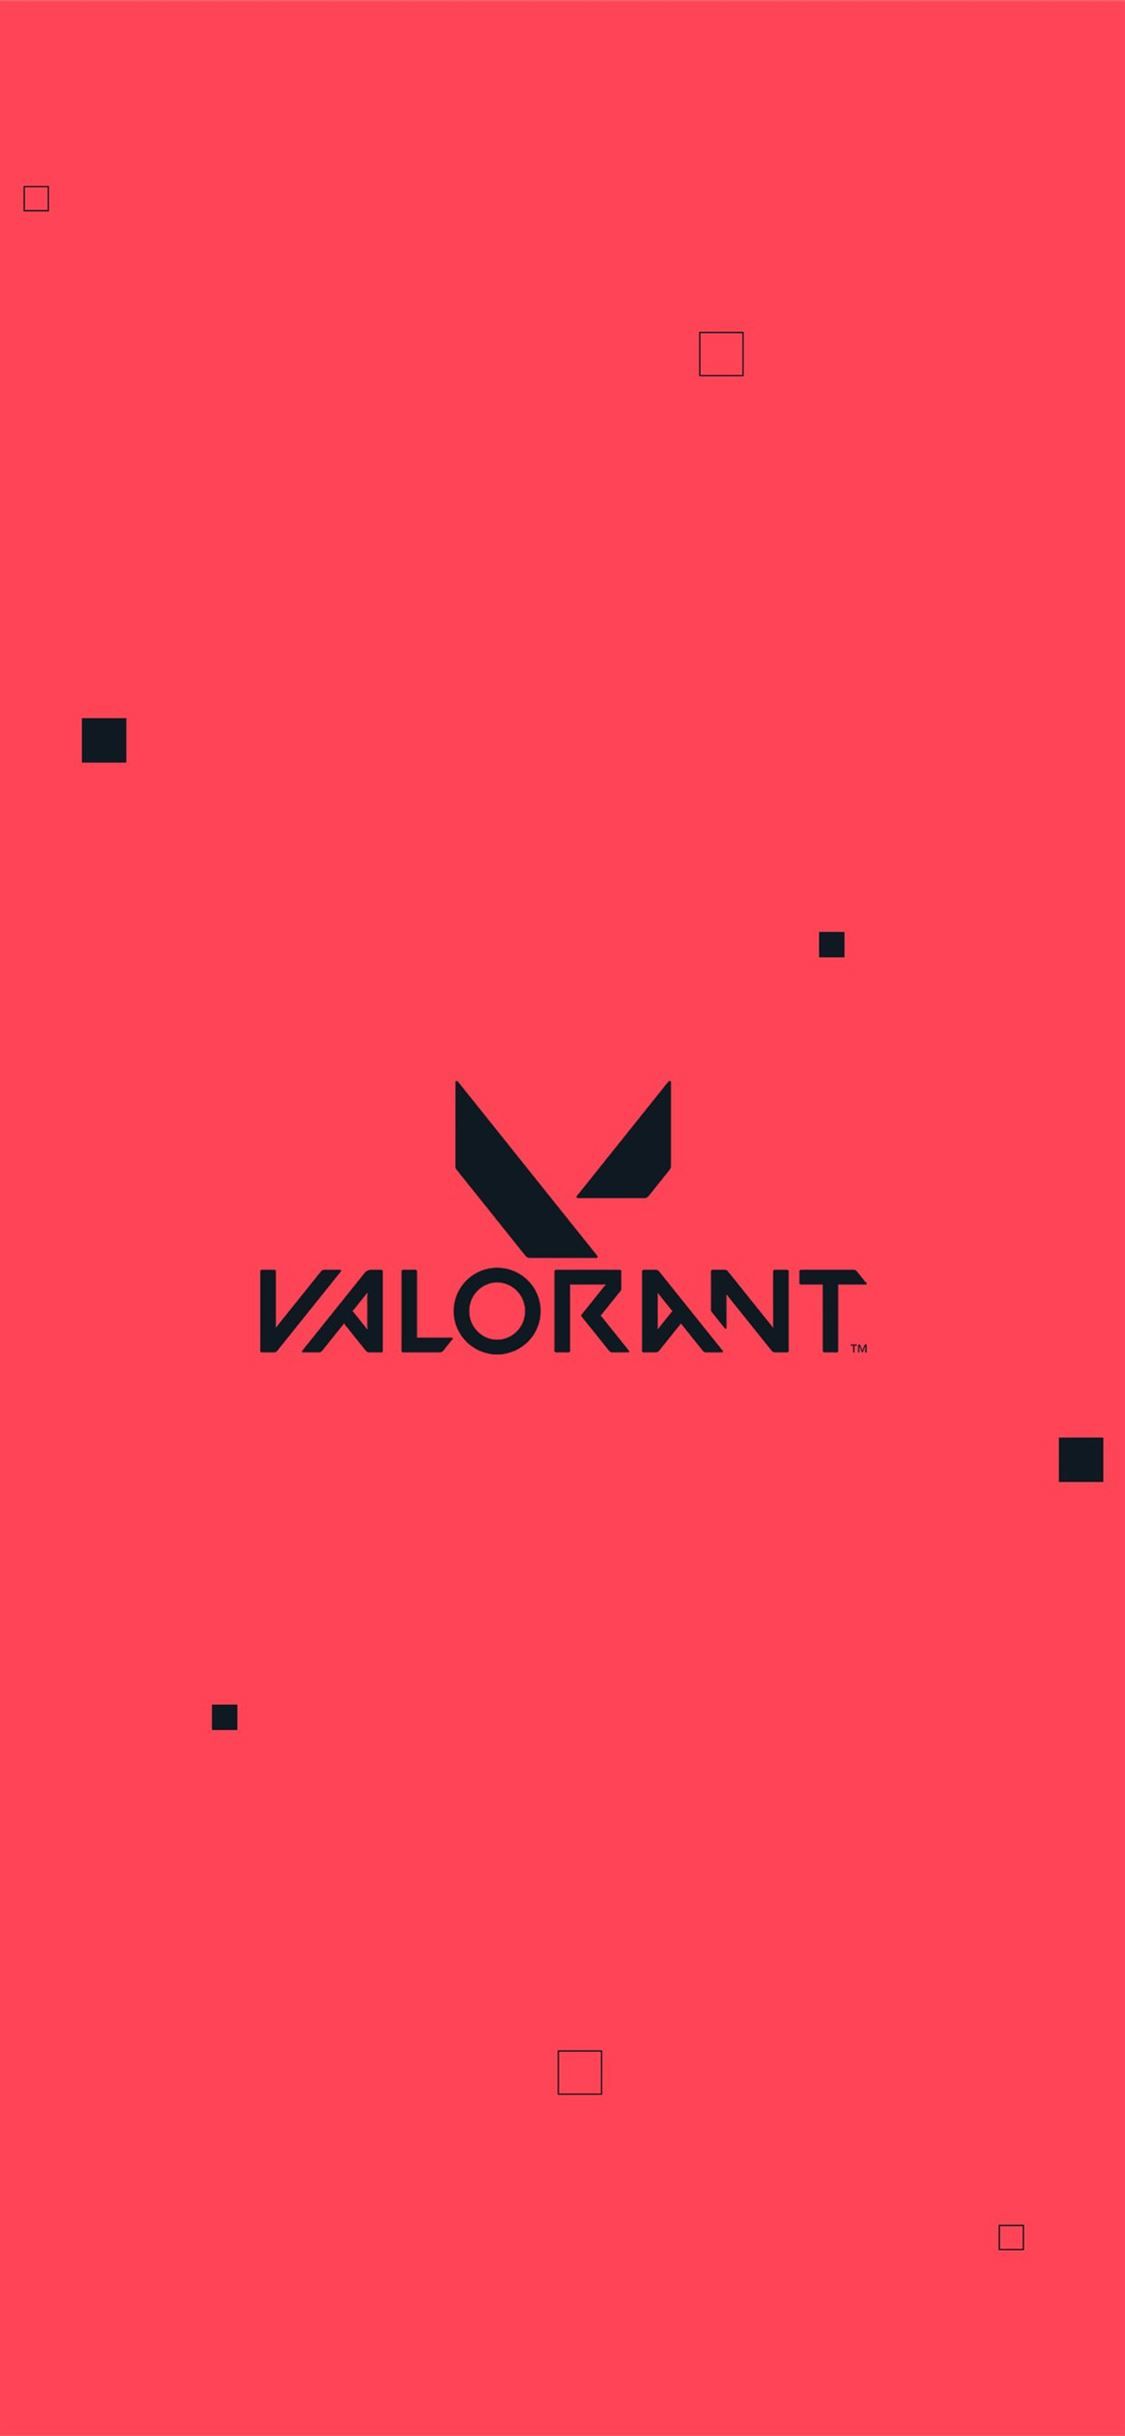 valorant logo red 4k iPhone 11 Wallpaper. Wallpaper